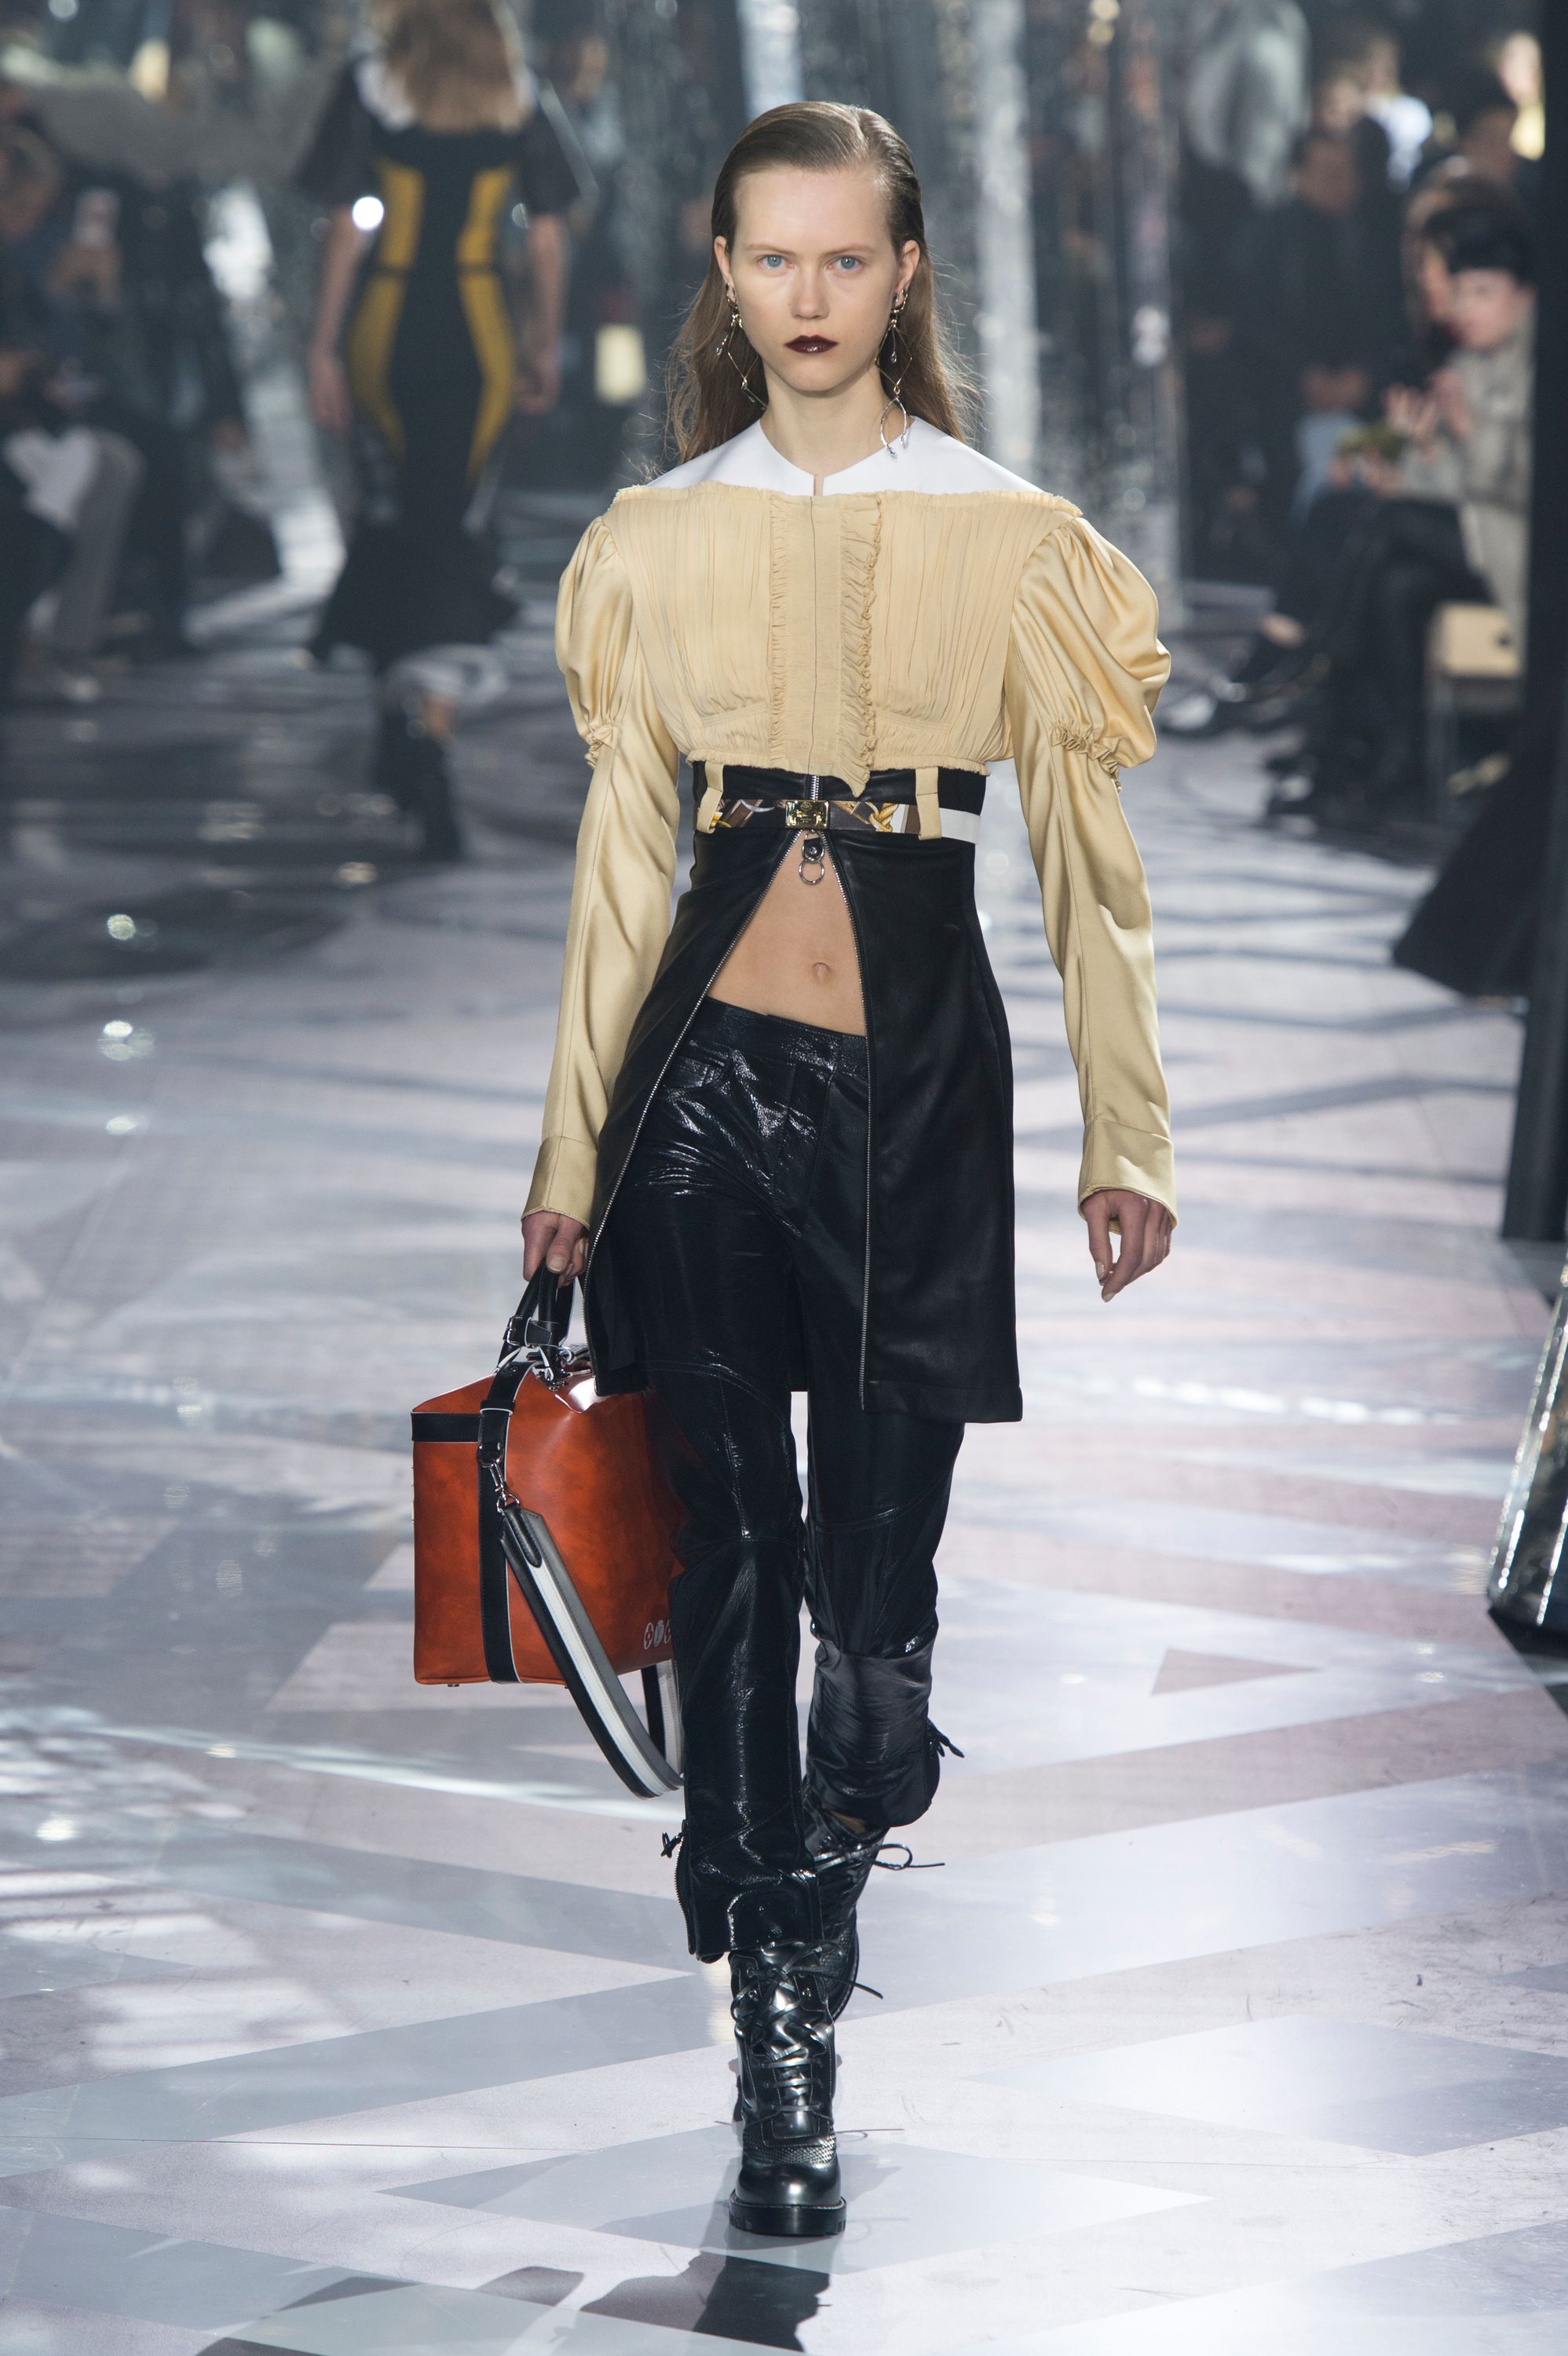 Model Julie Hoomans walks on the runway during the Louis Vuitton Fashion  Show during Paris Fashion